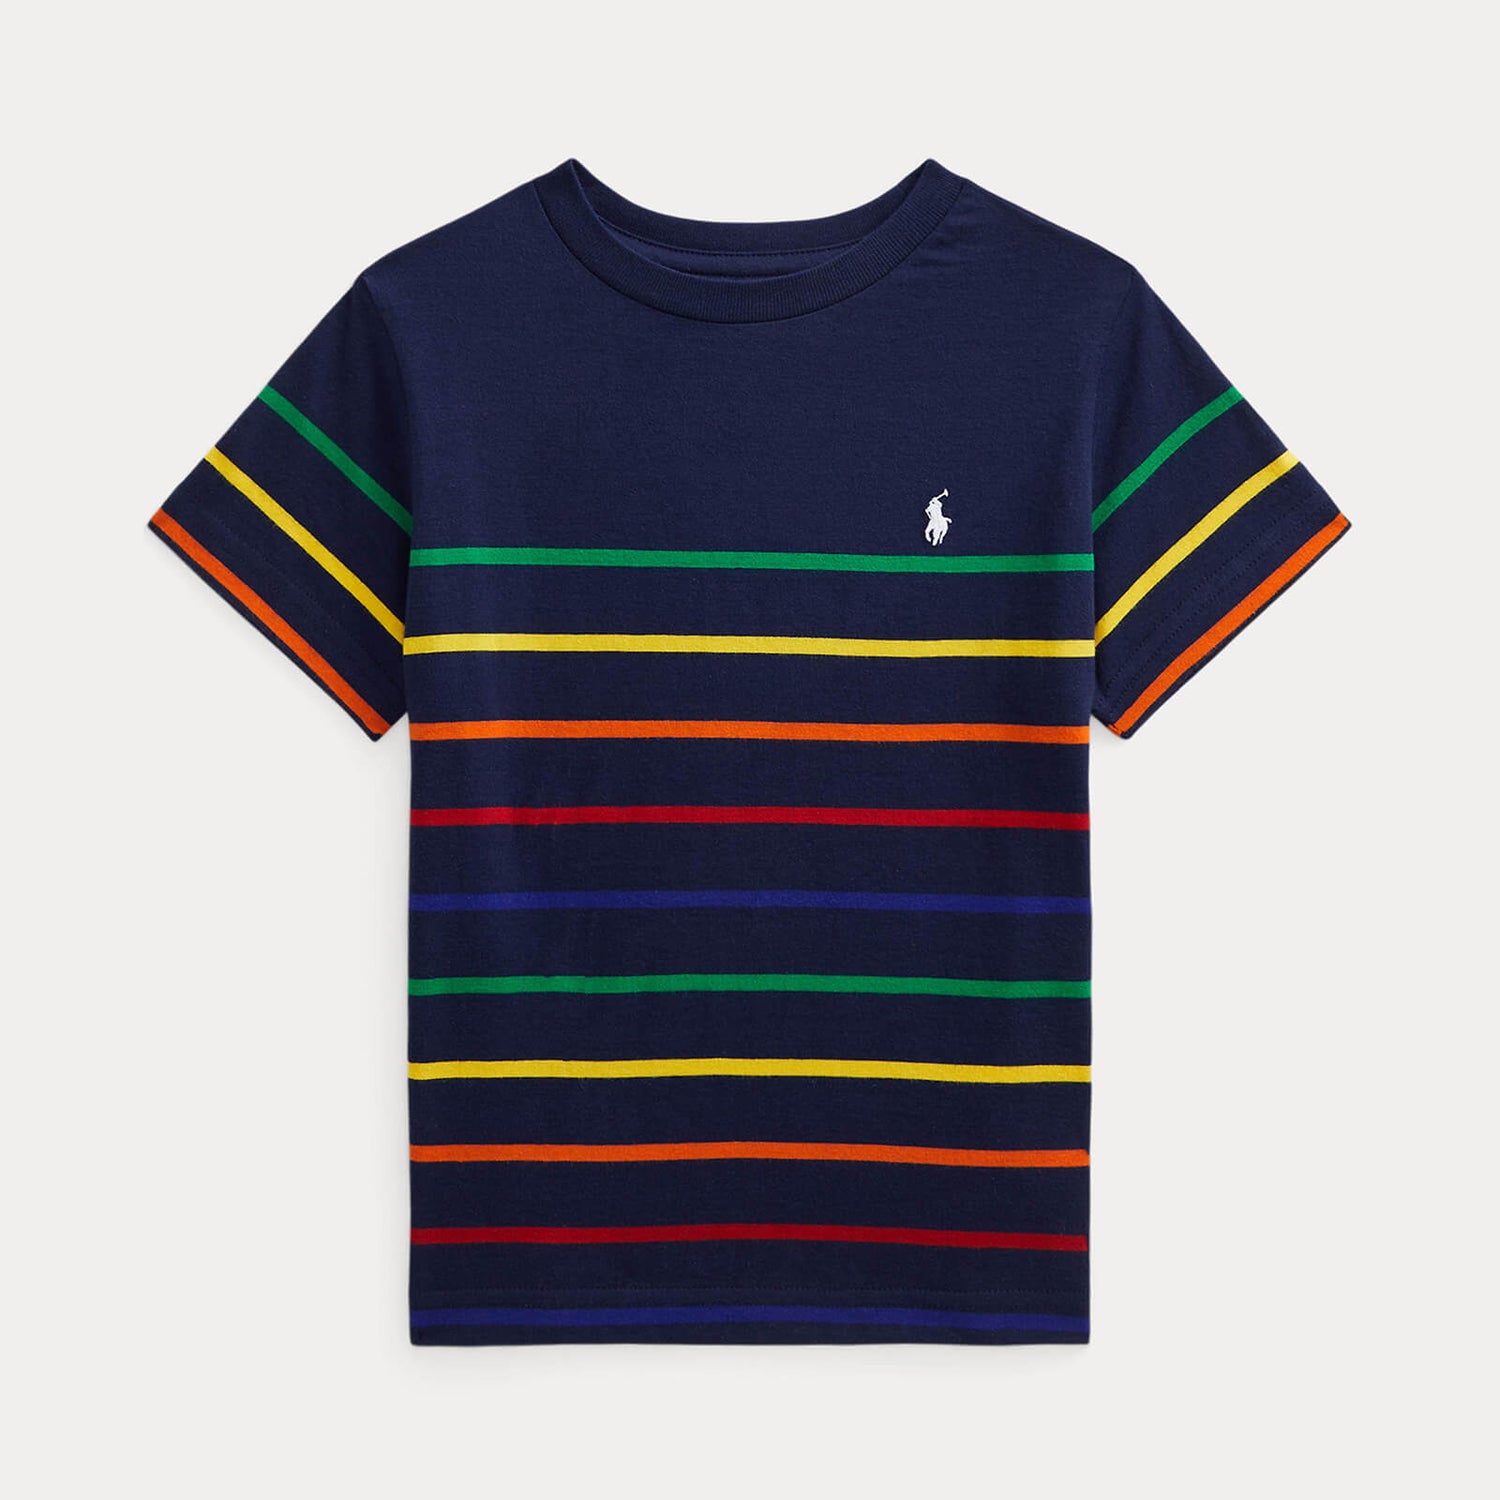 Ralph Lauren Boys' Short Sleeve Stripe T-Shirt - Newport Navy Multi